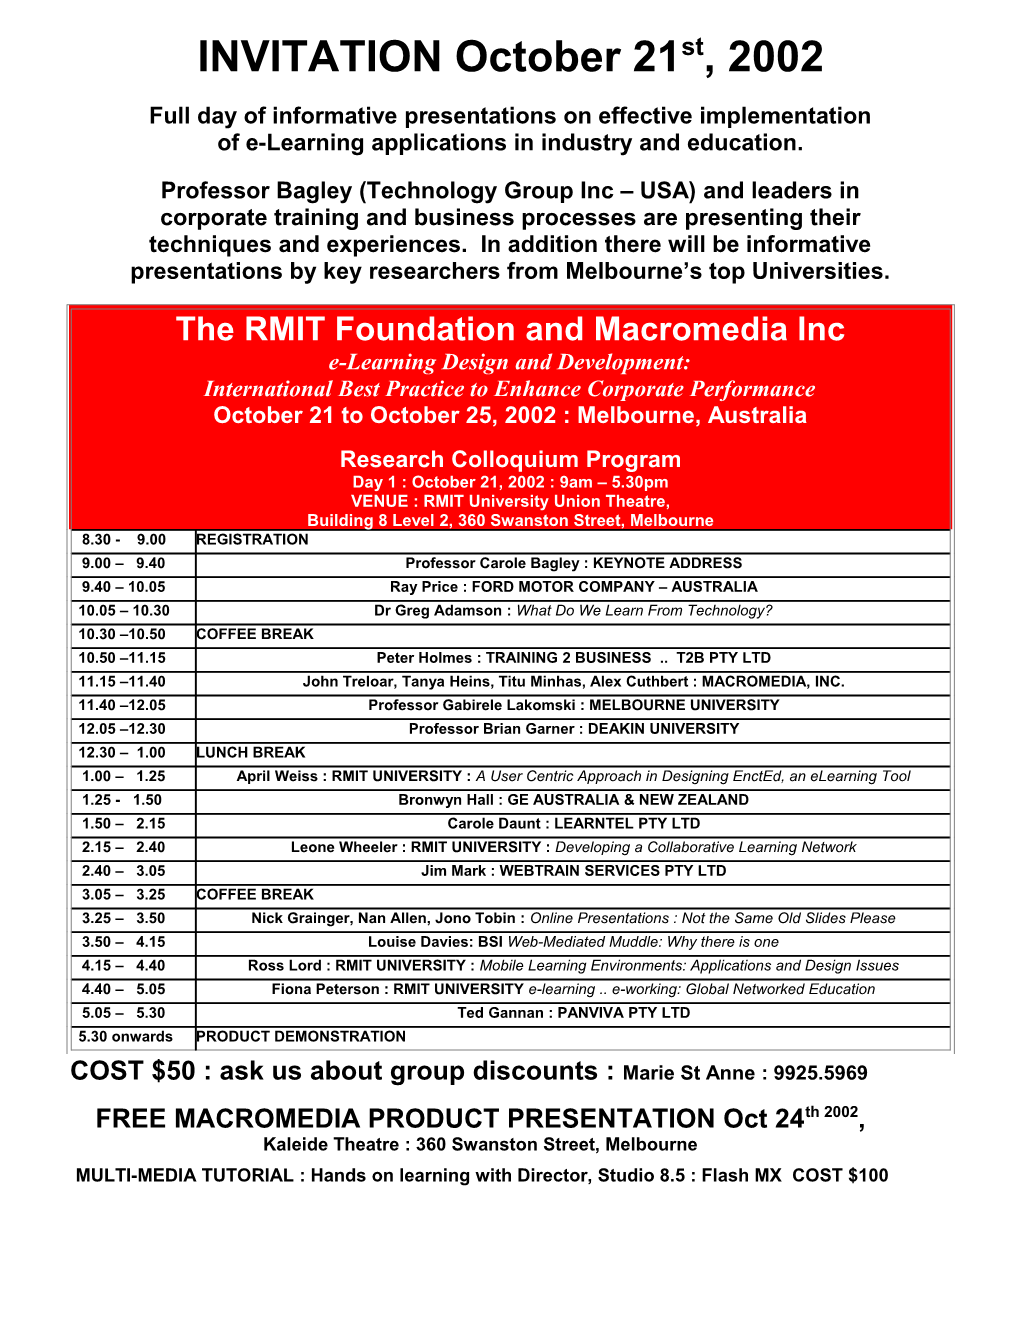 The RMIT Foundation and Macromedia Inc